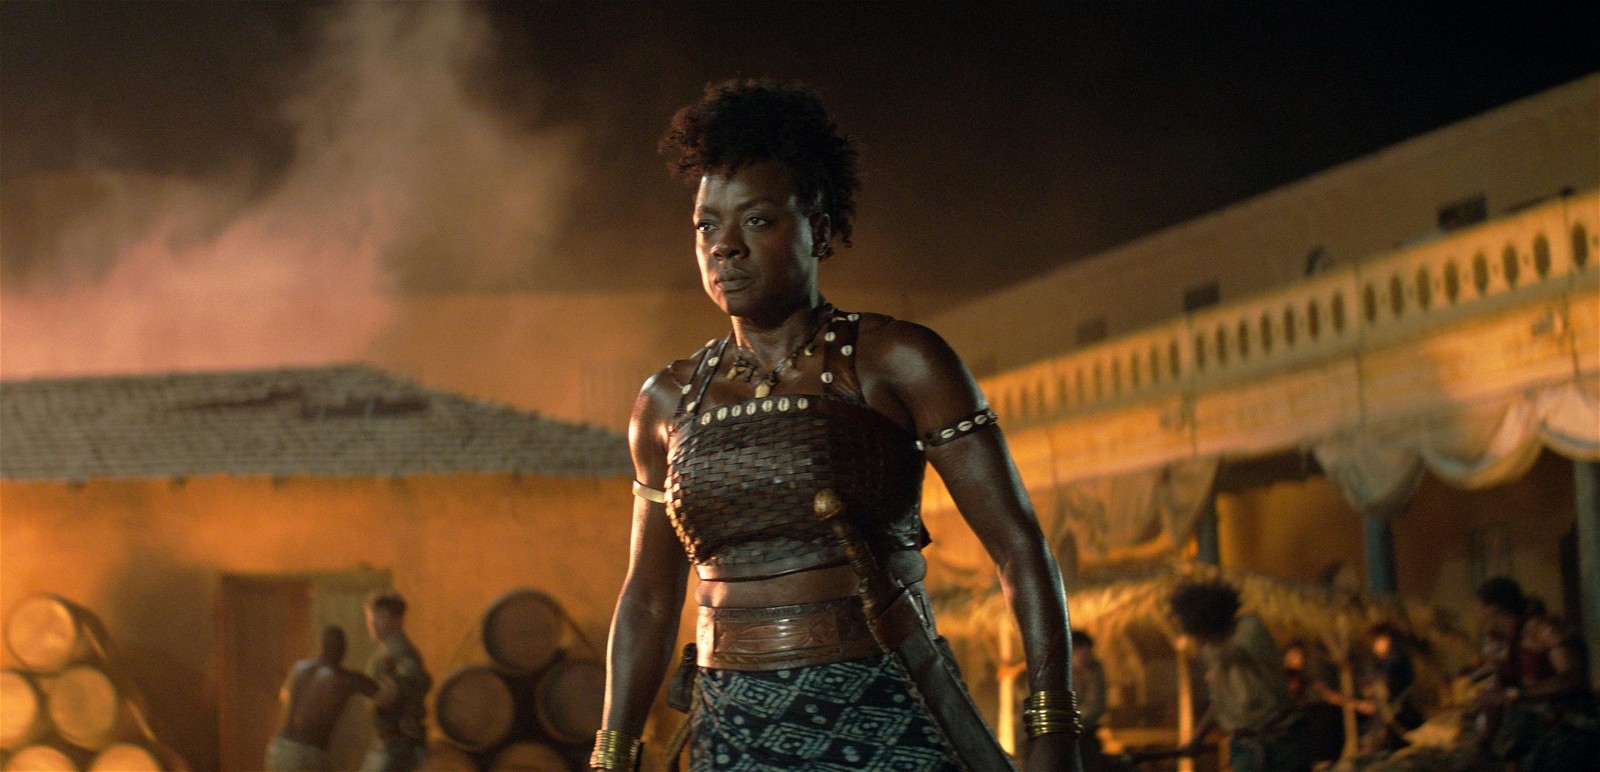 Viola Davis shines as Nanisca in The Woman King (2022).